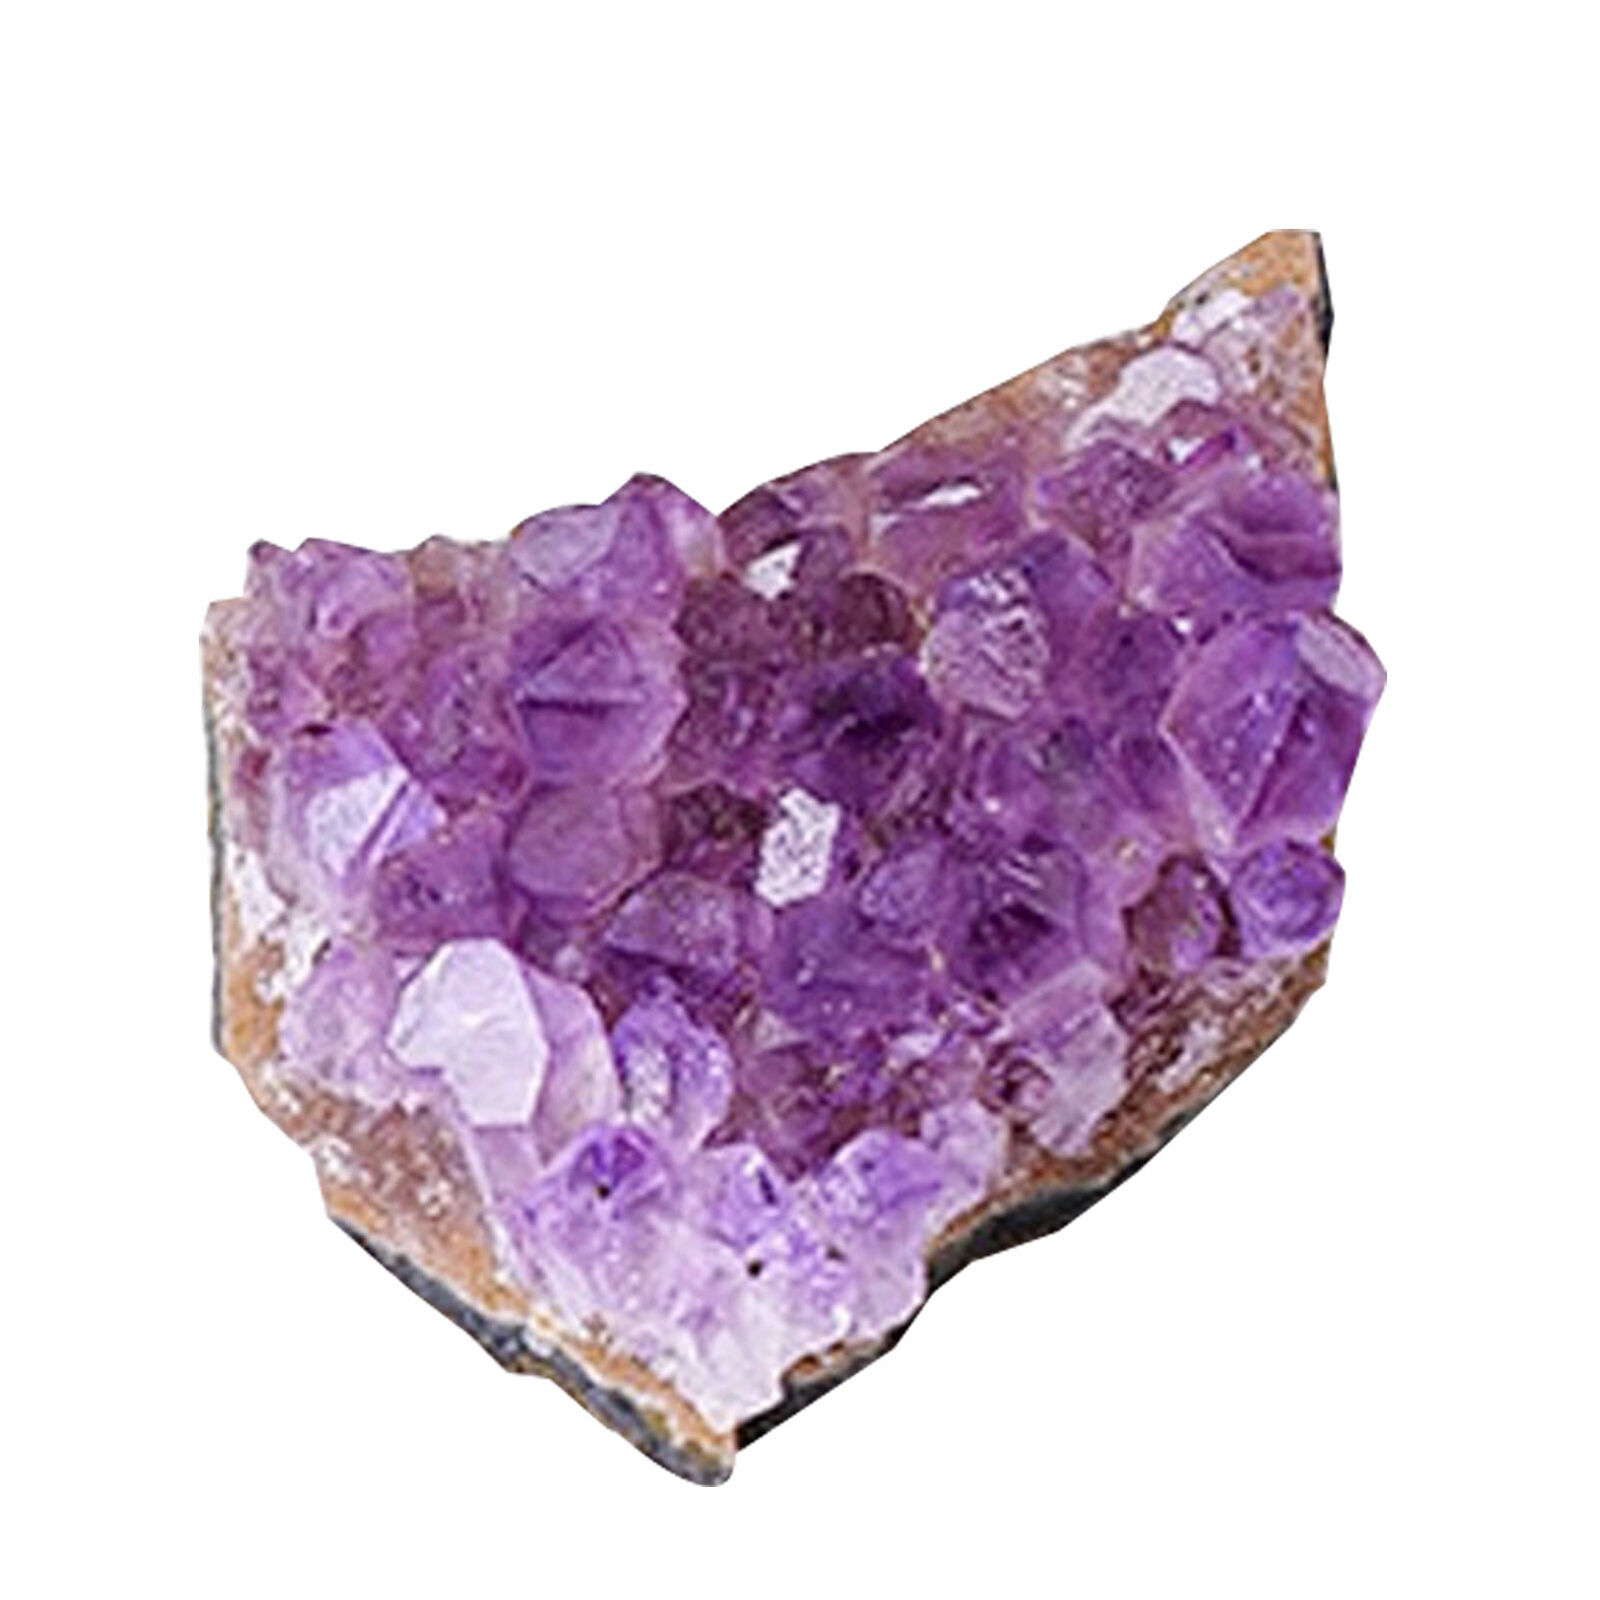 1x Natural Purpler Amethyst Quartzs Geode Crystal Cluster Healing Specimen Decor